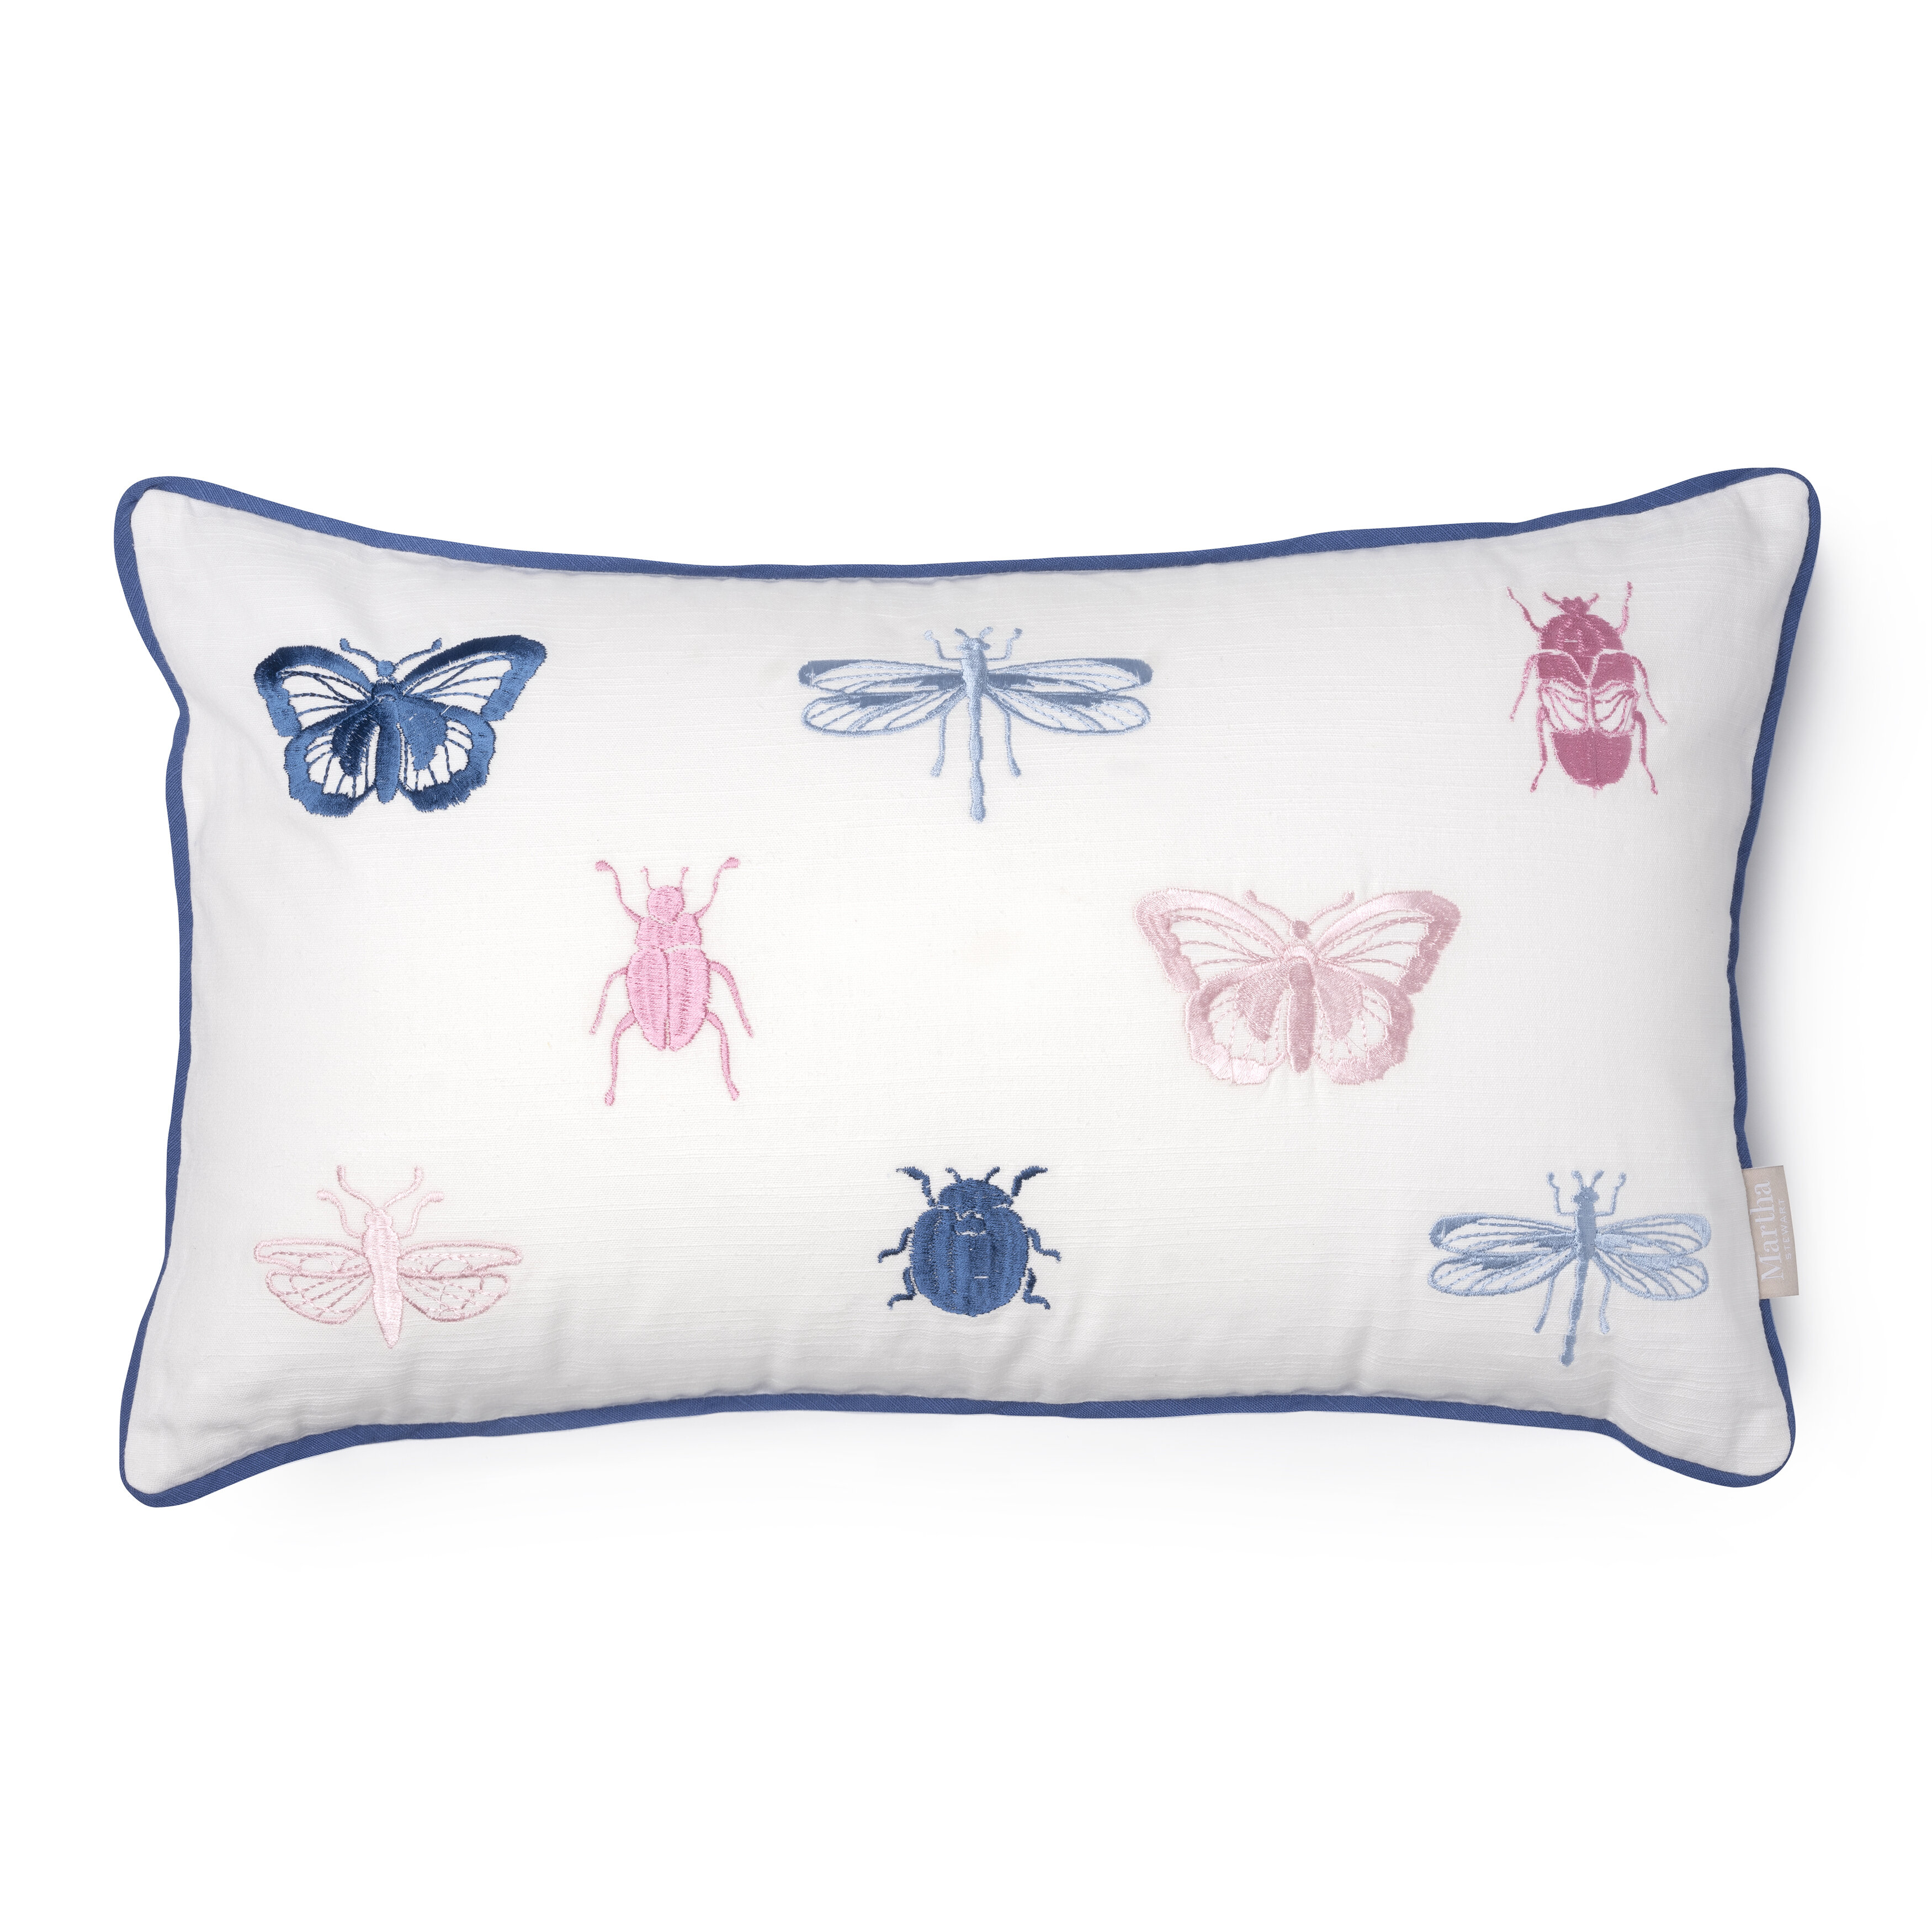 Kids Bugs Beetles Standard Size Pillow Case Free Shipping